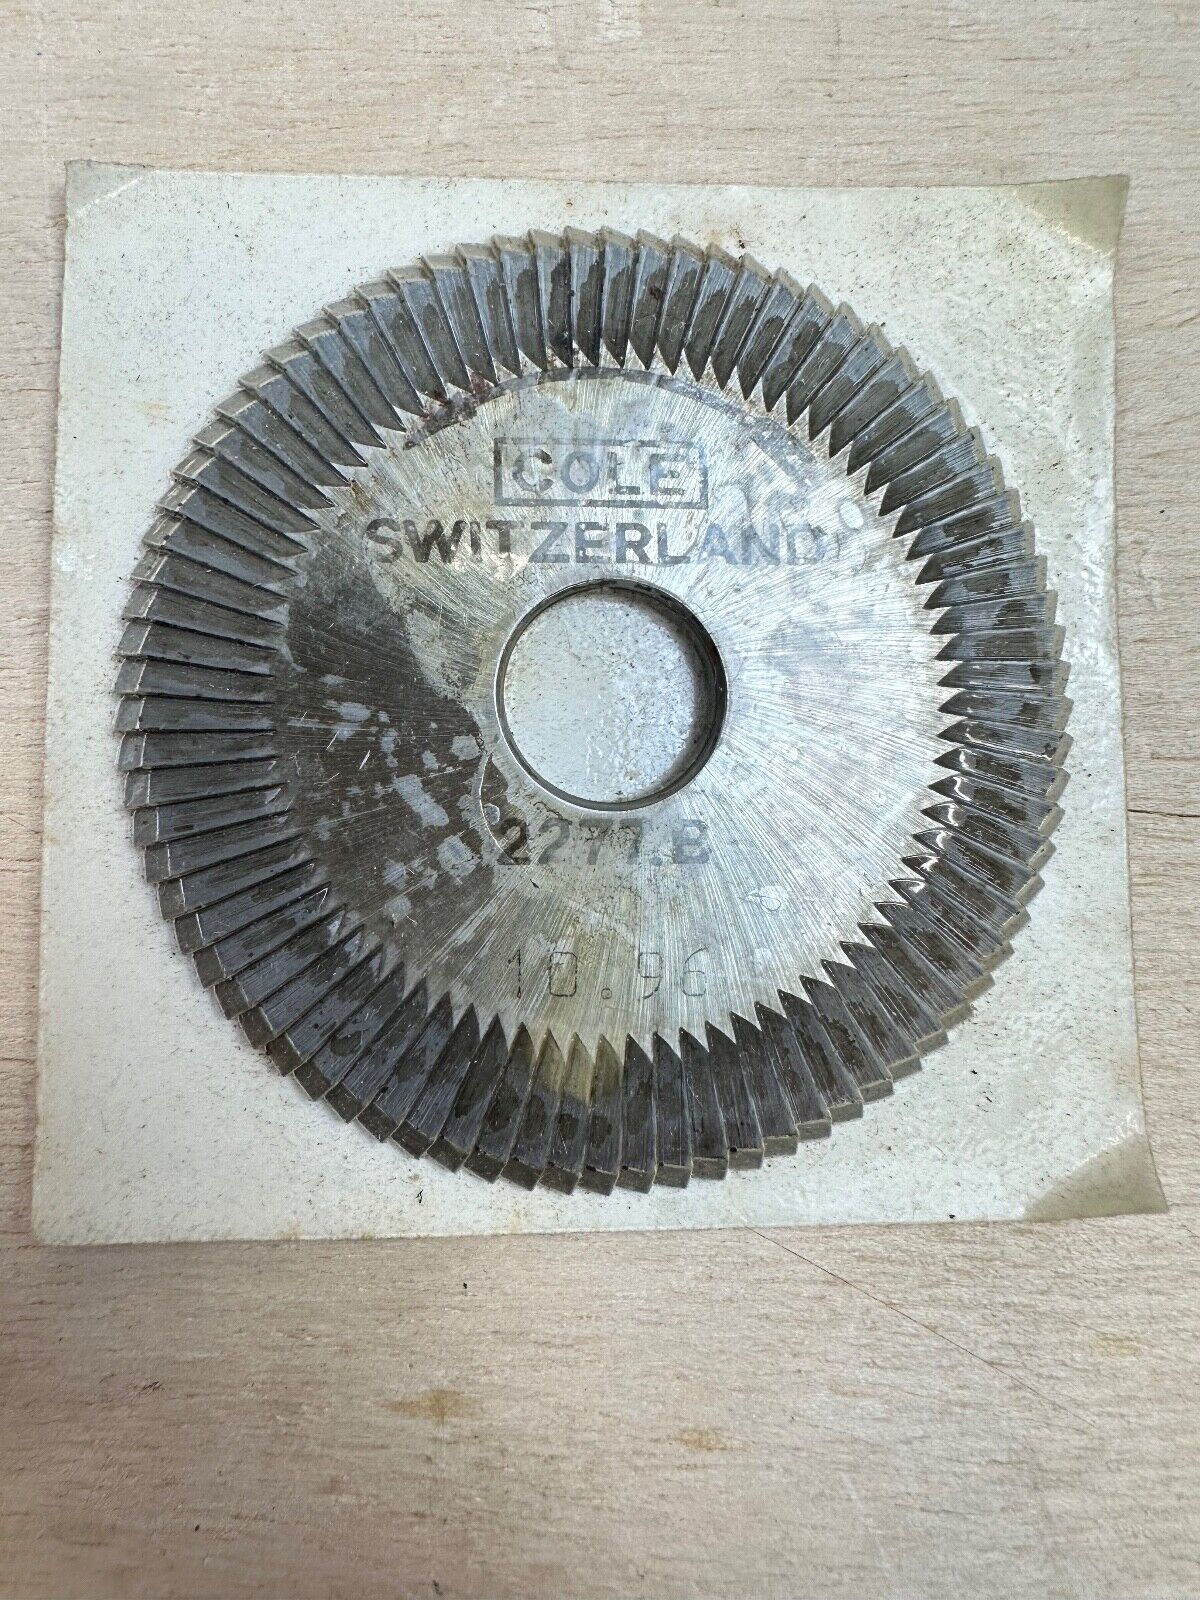 NOS COLE Key Cutting Wheel Cutter 2277.B Switzerland Sealed Original Package NIB